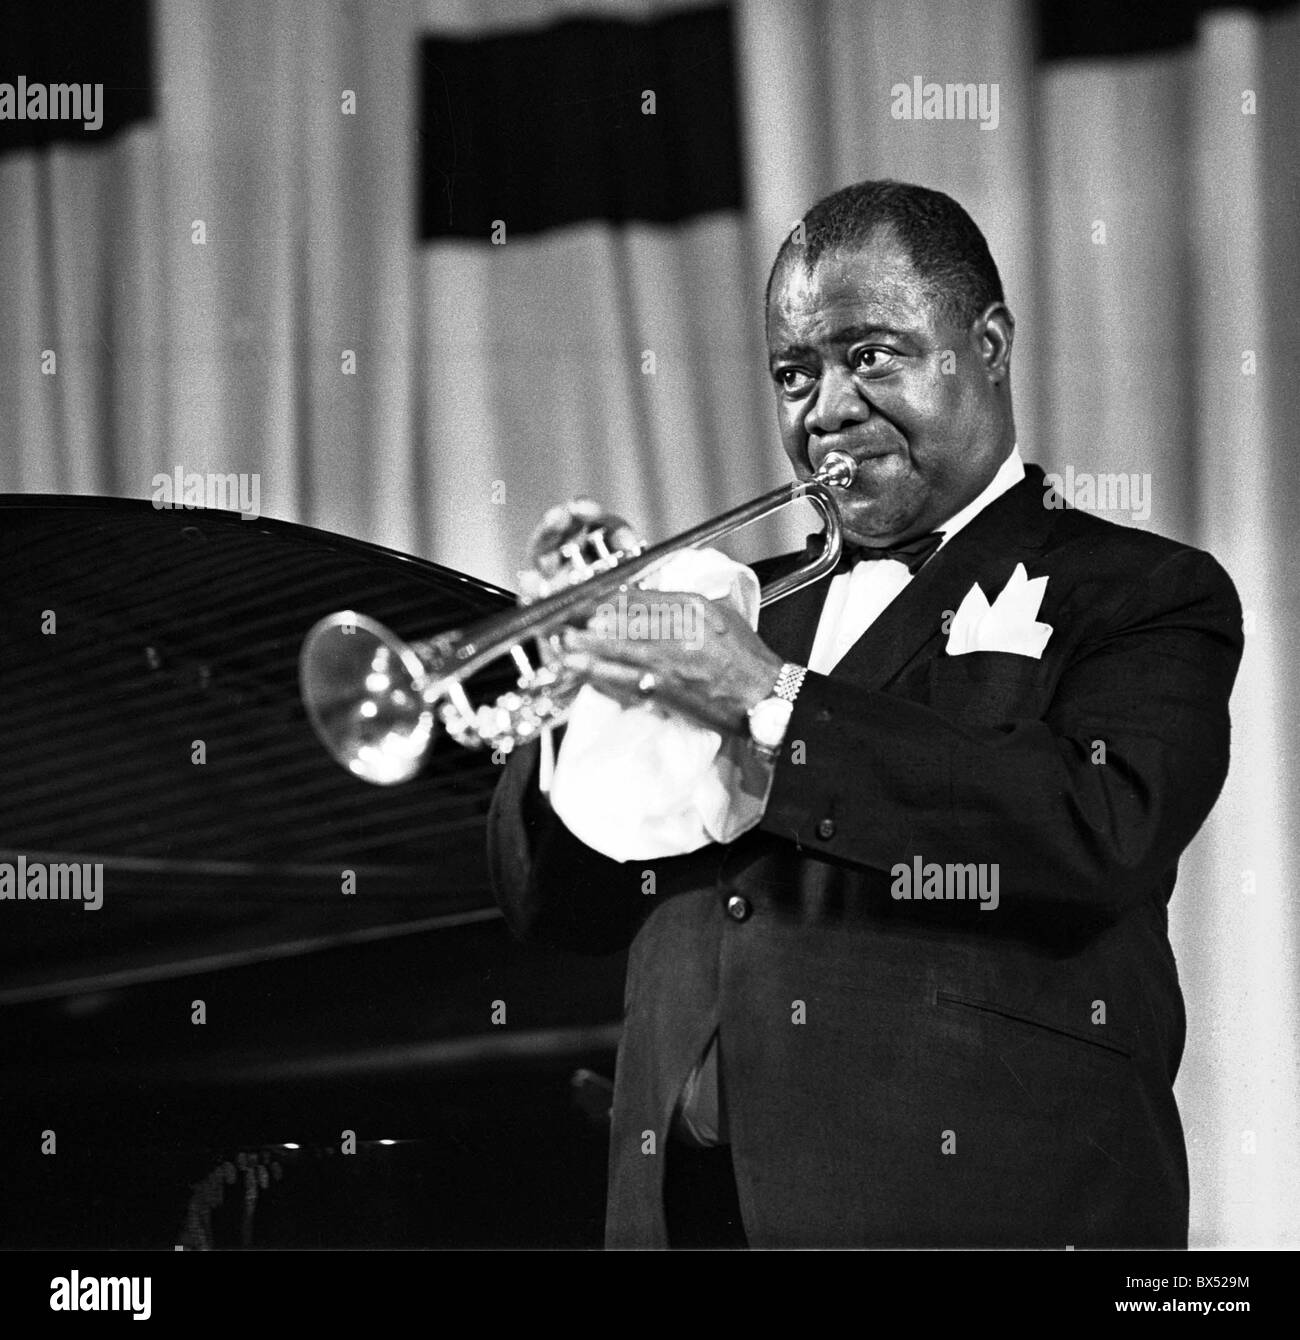 jazz singer, trumpet player, popular, African - American Stock Photo